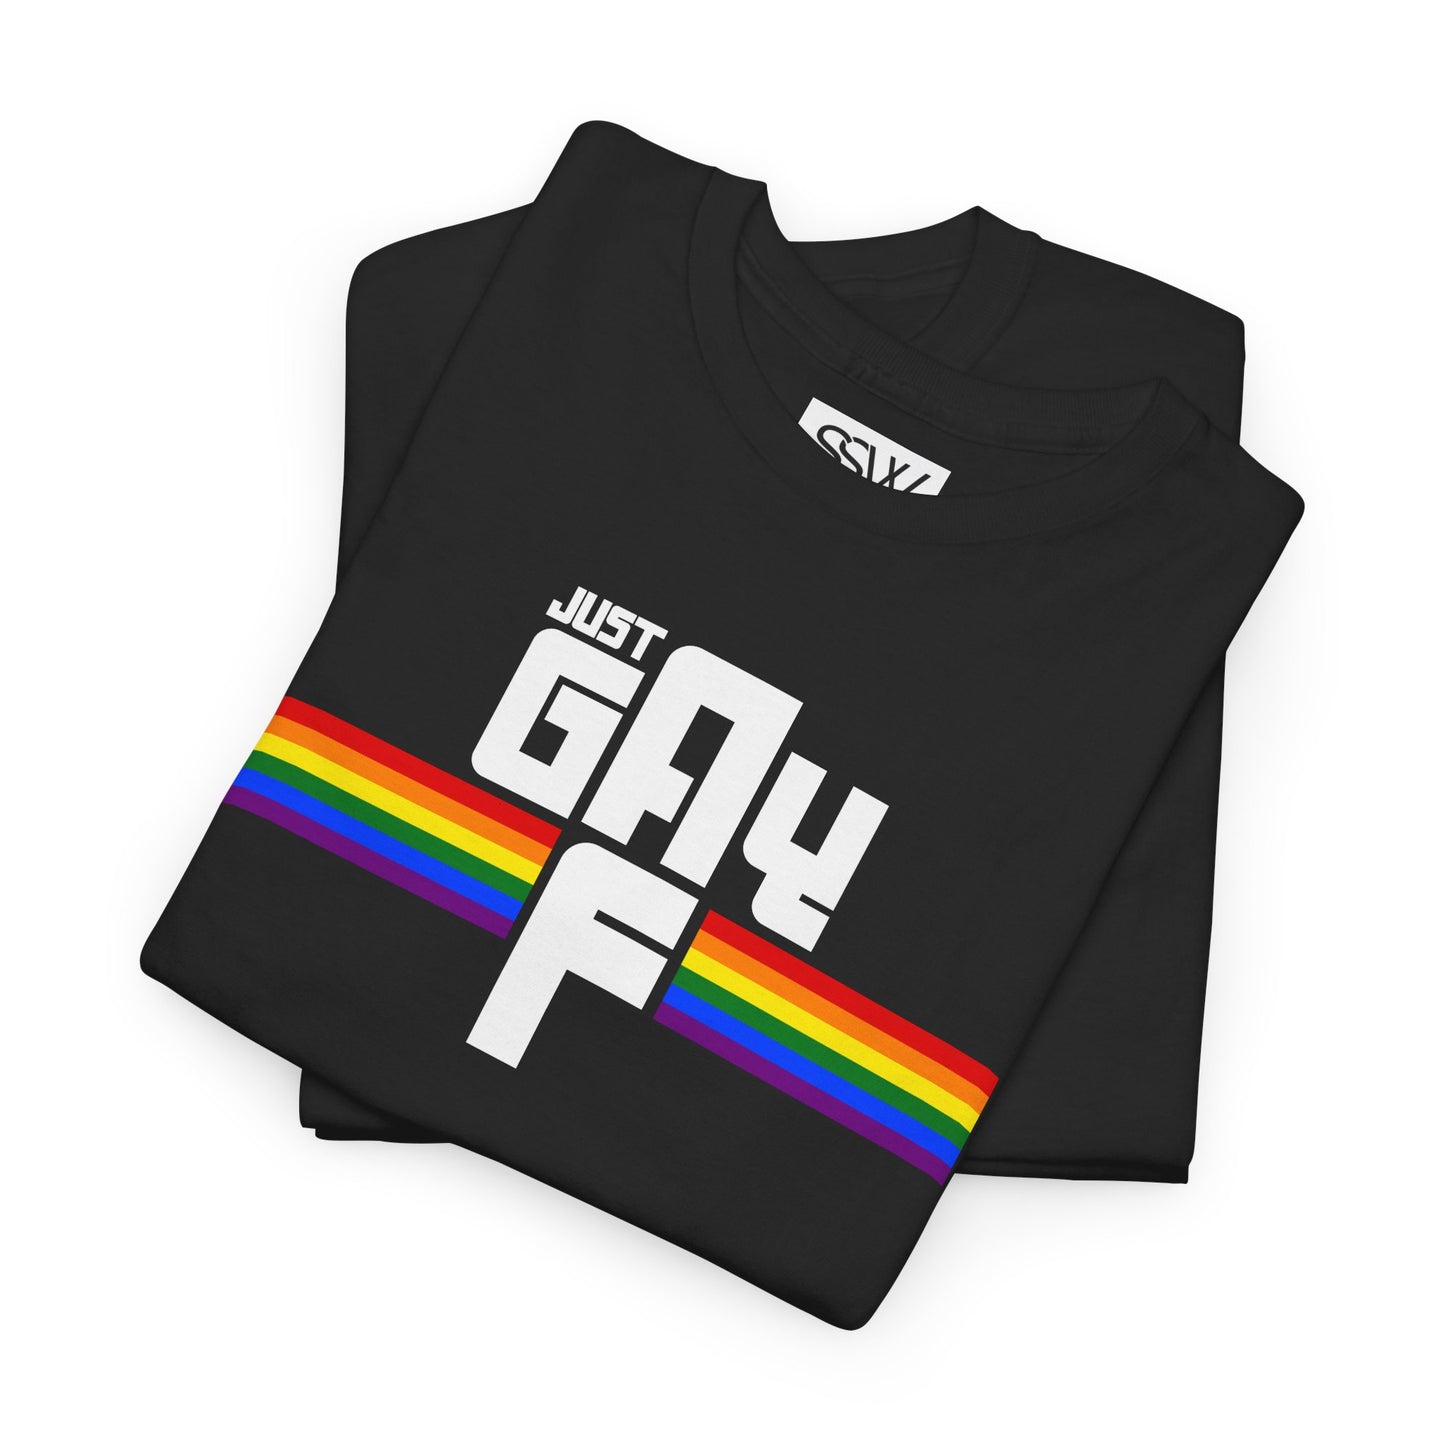 Just Pride Tee Shirt